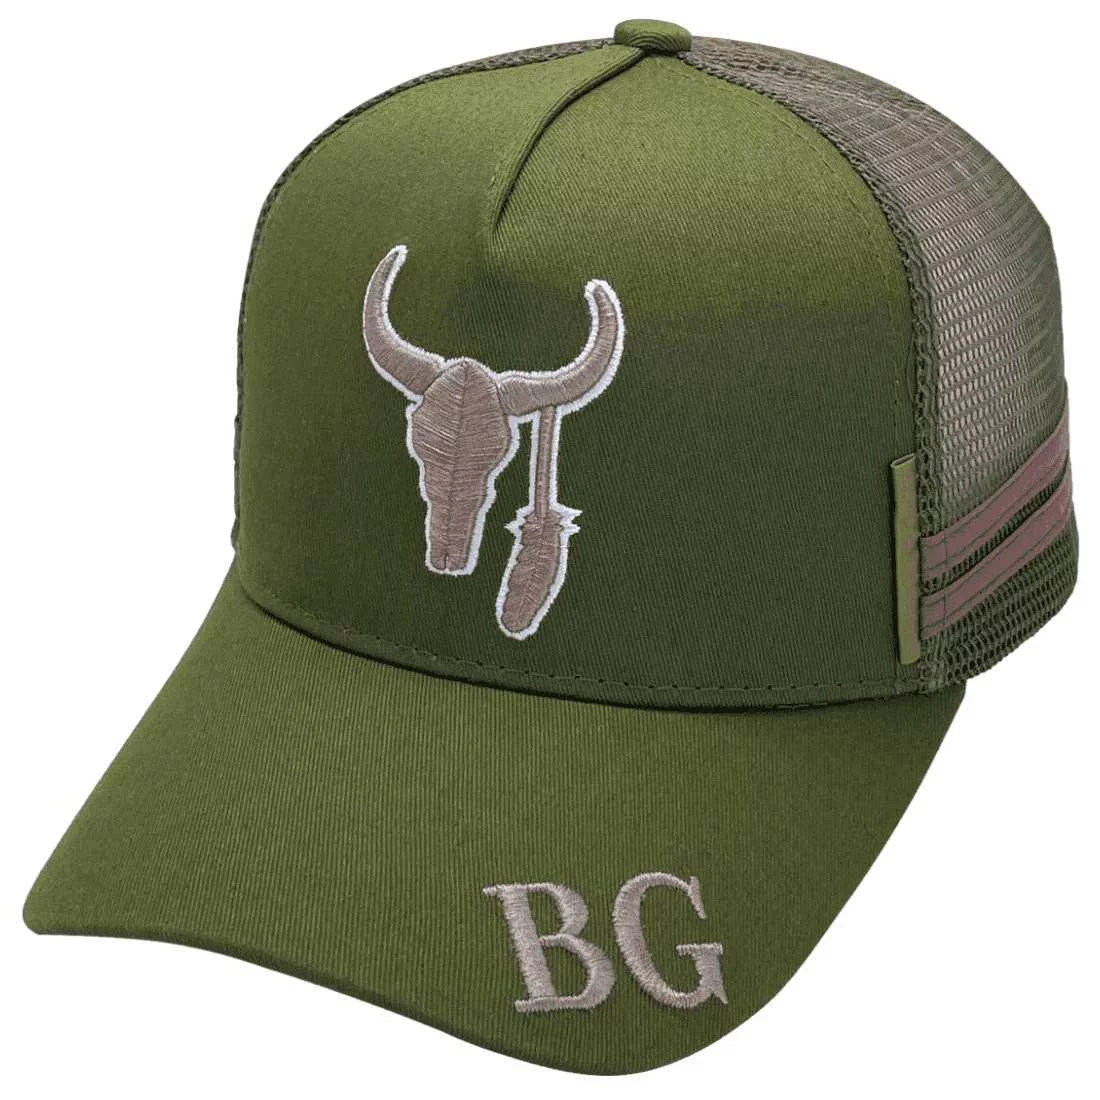 Buffalo Gus Ballarat VIC LP Original Midrange Aussie Trucker Hats with double side bands Army Green Cotton